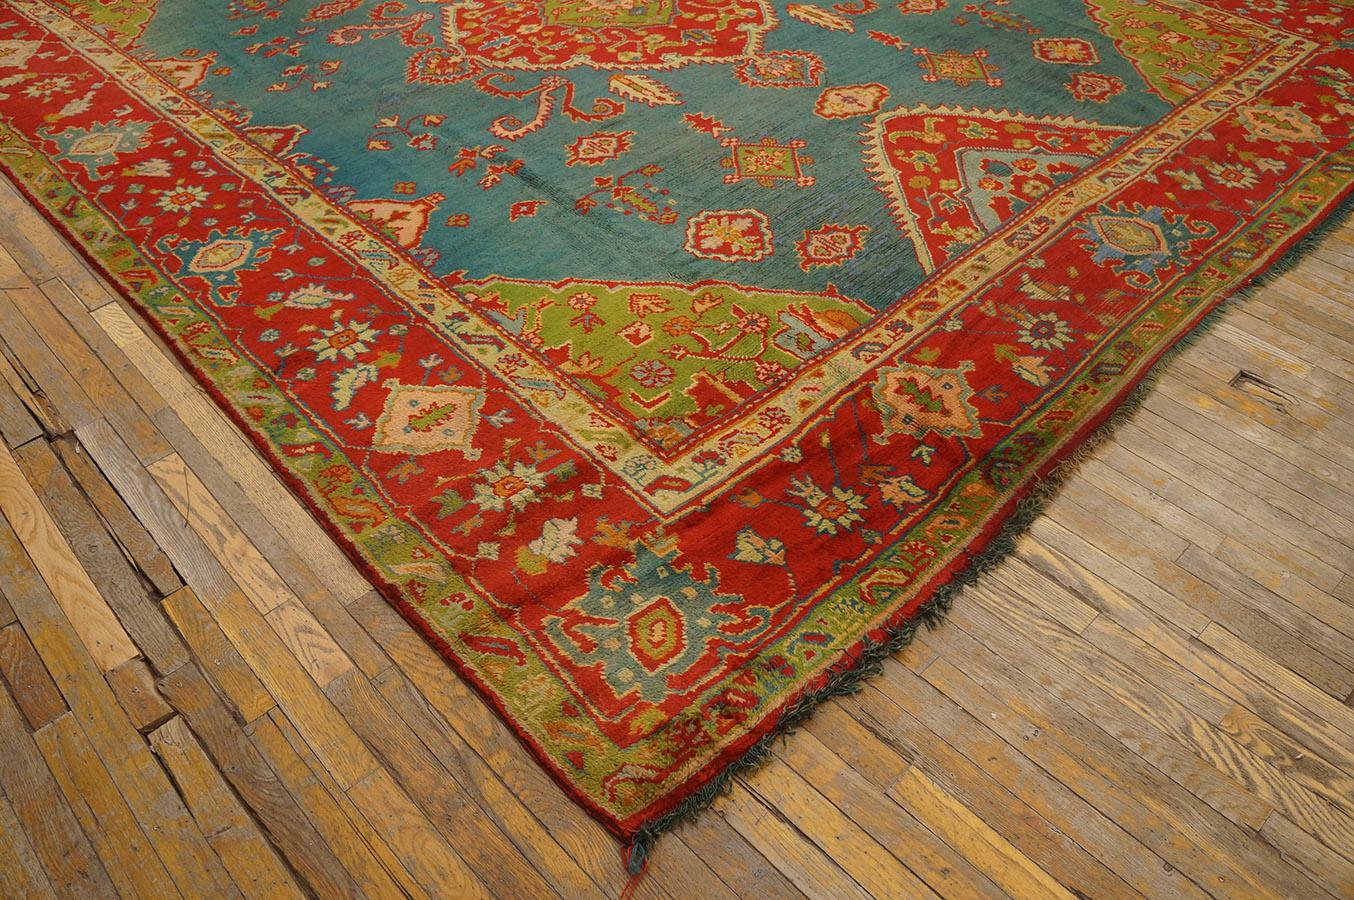 Late 19th Century Turkish Oushak Carpet ( 11' 2'' x 13' 1'' - 340 x 398 cm ) For Sale 10